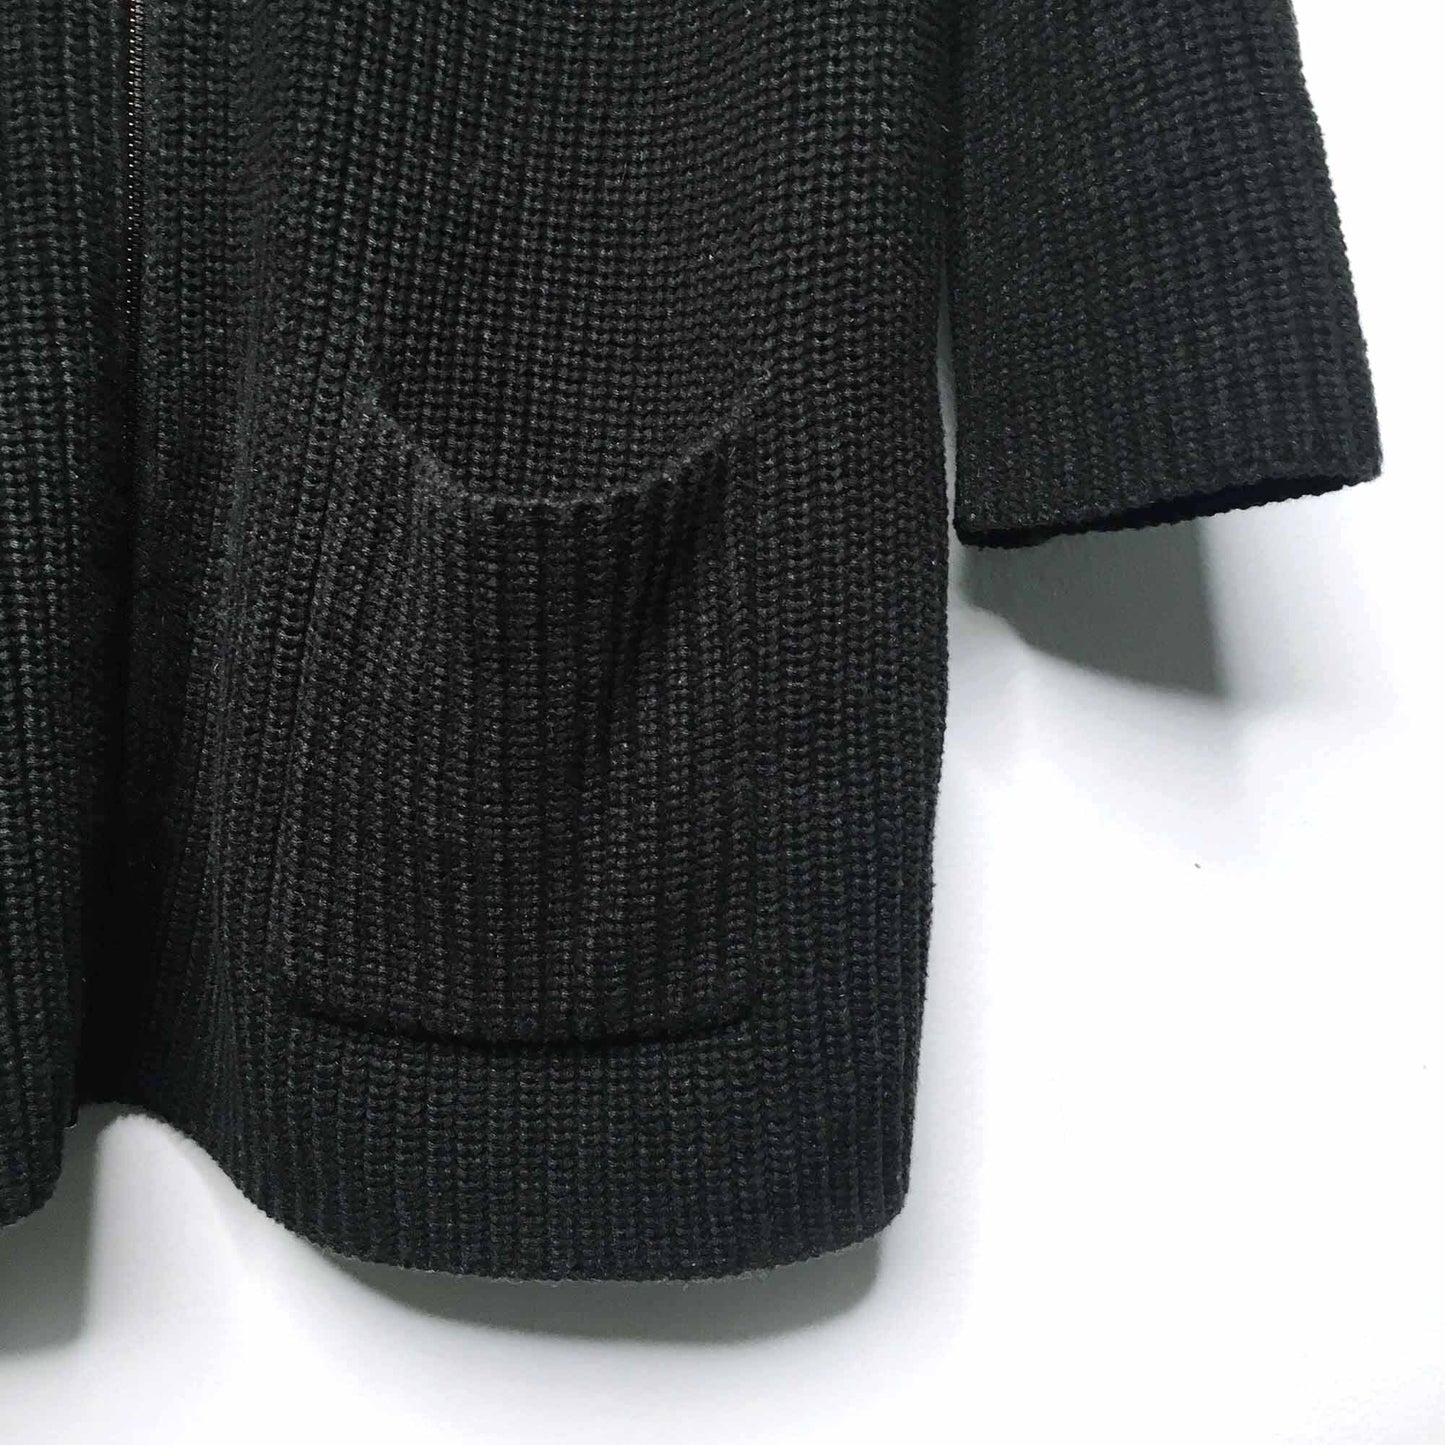 Eileen Fisher organic cotton cashmere zip cardigan - size Large